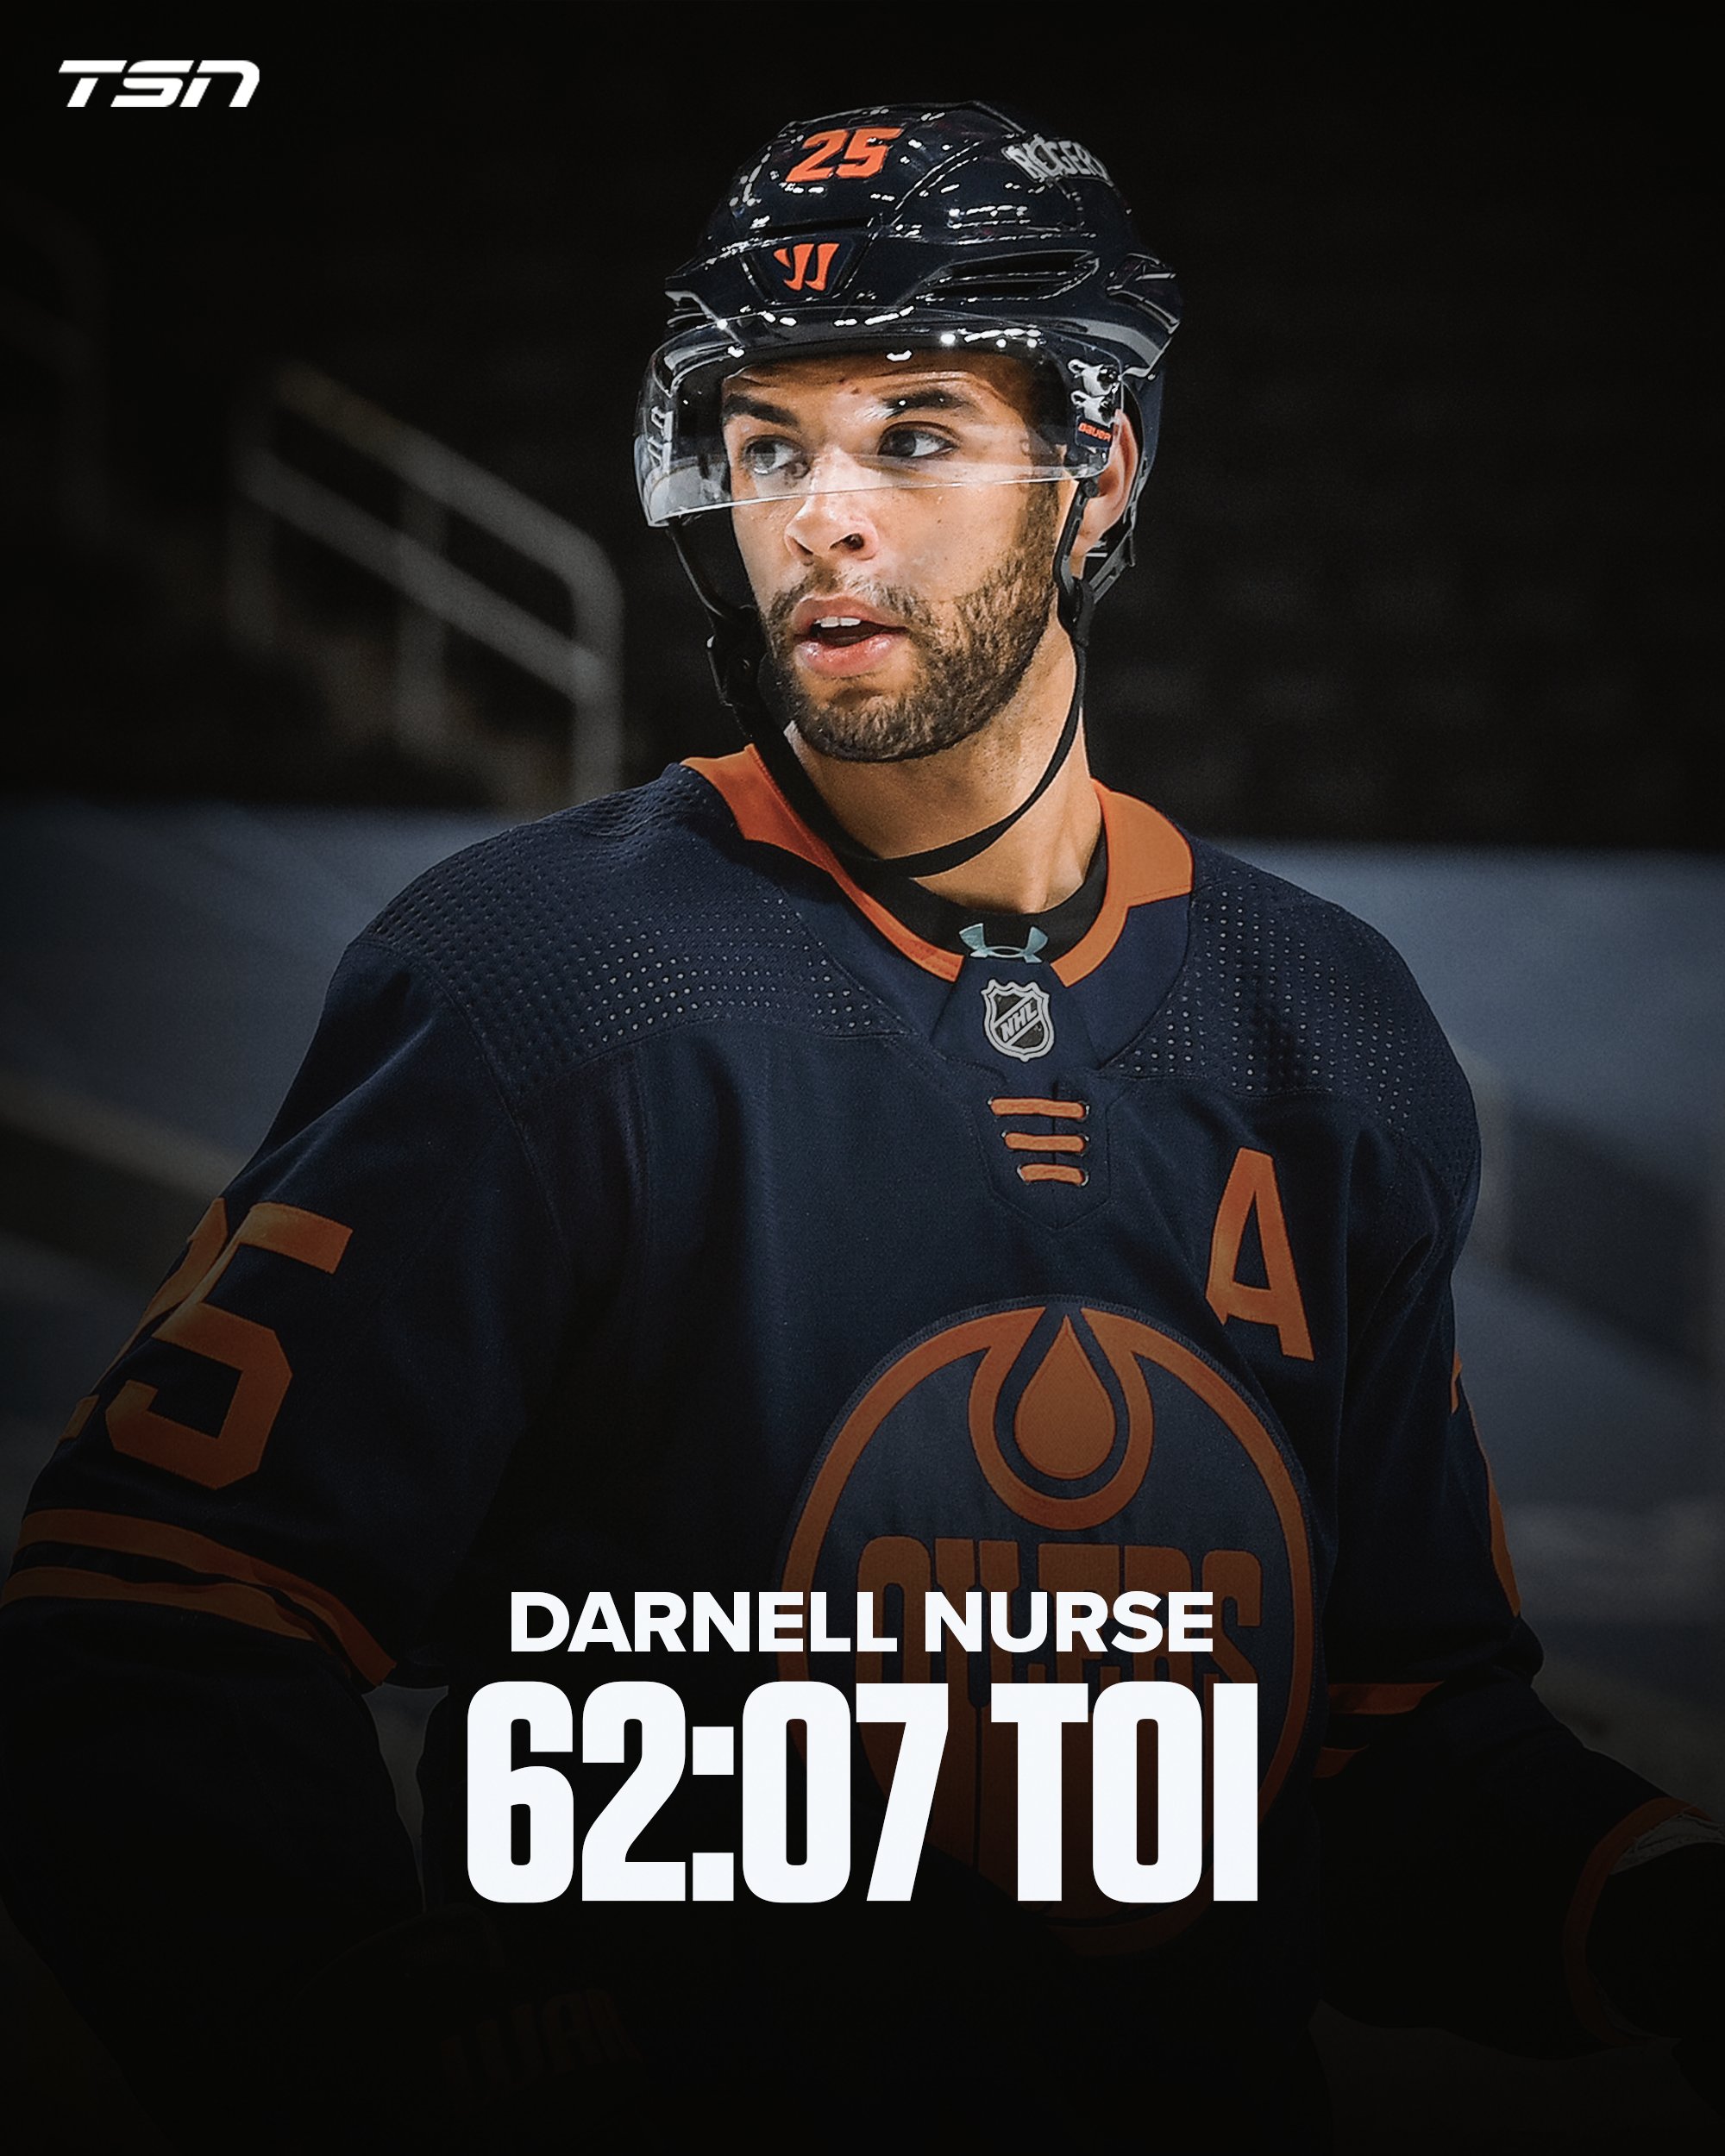 Darnell Nurse Jerseys, Darnell Nurse Shirt, NHL Darnell Nurse Gear